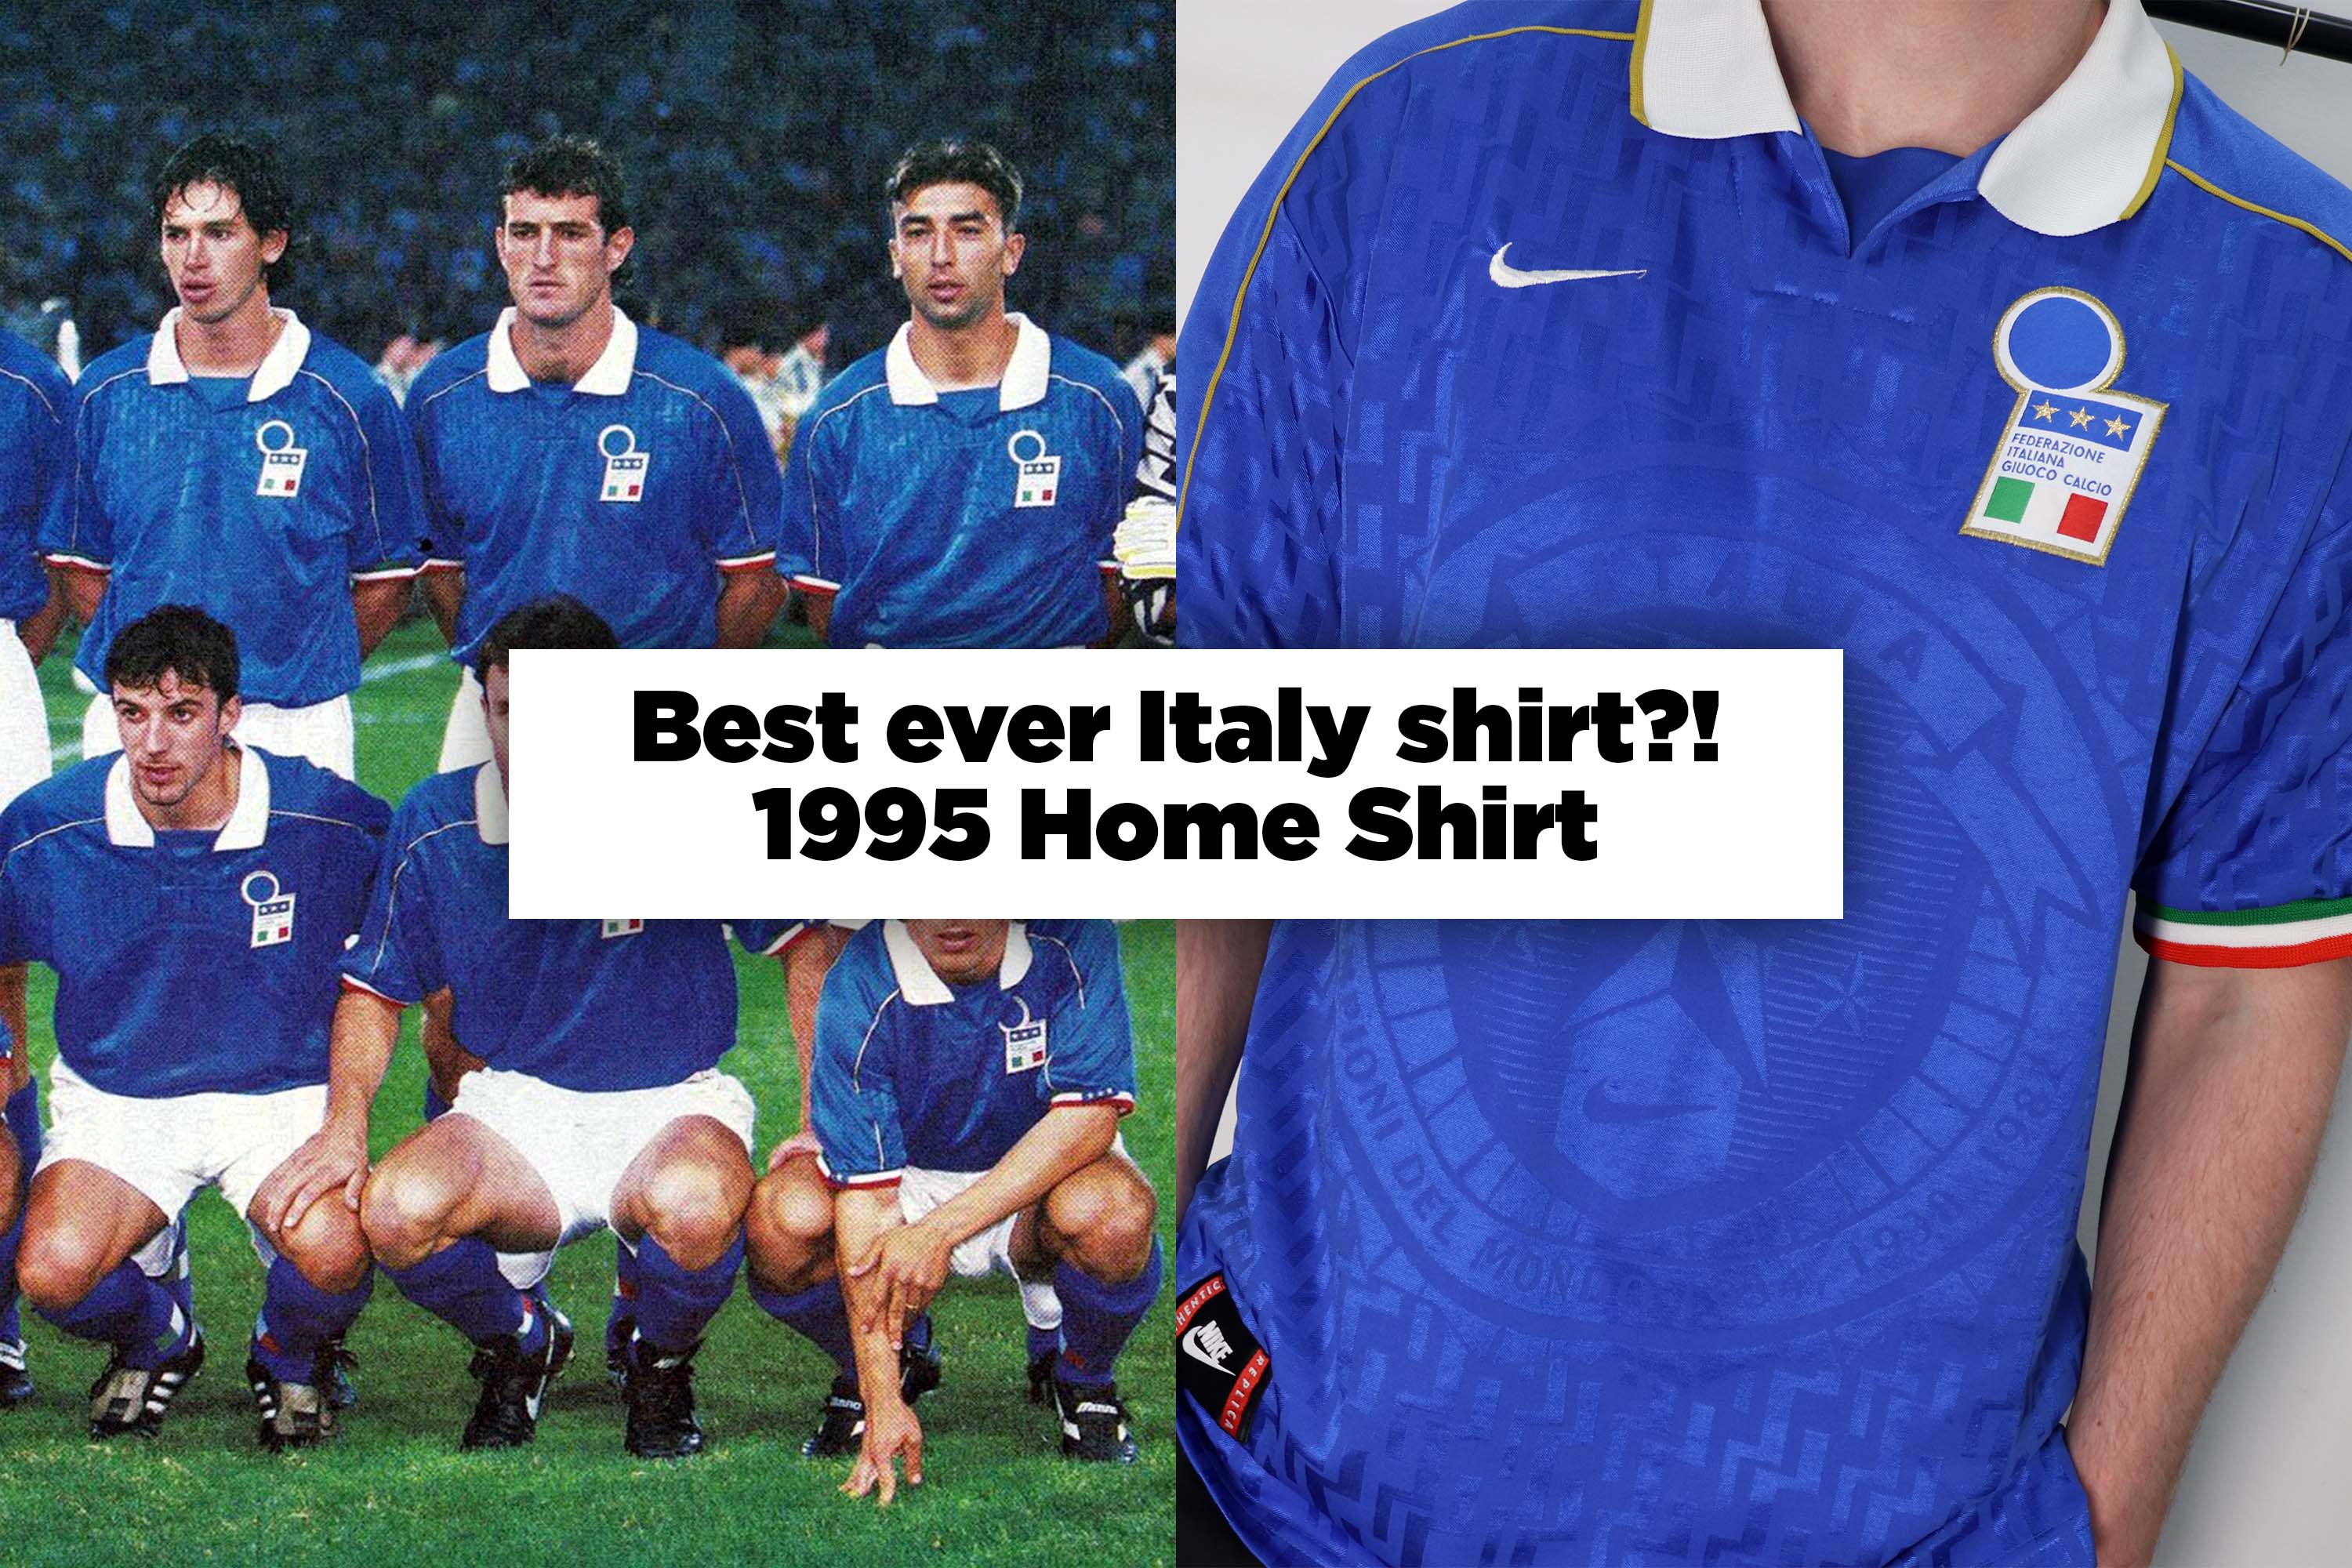 Italian Football News 🇮🇹 on X: The Napoli story in context